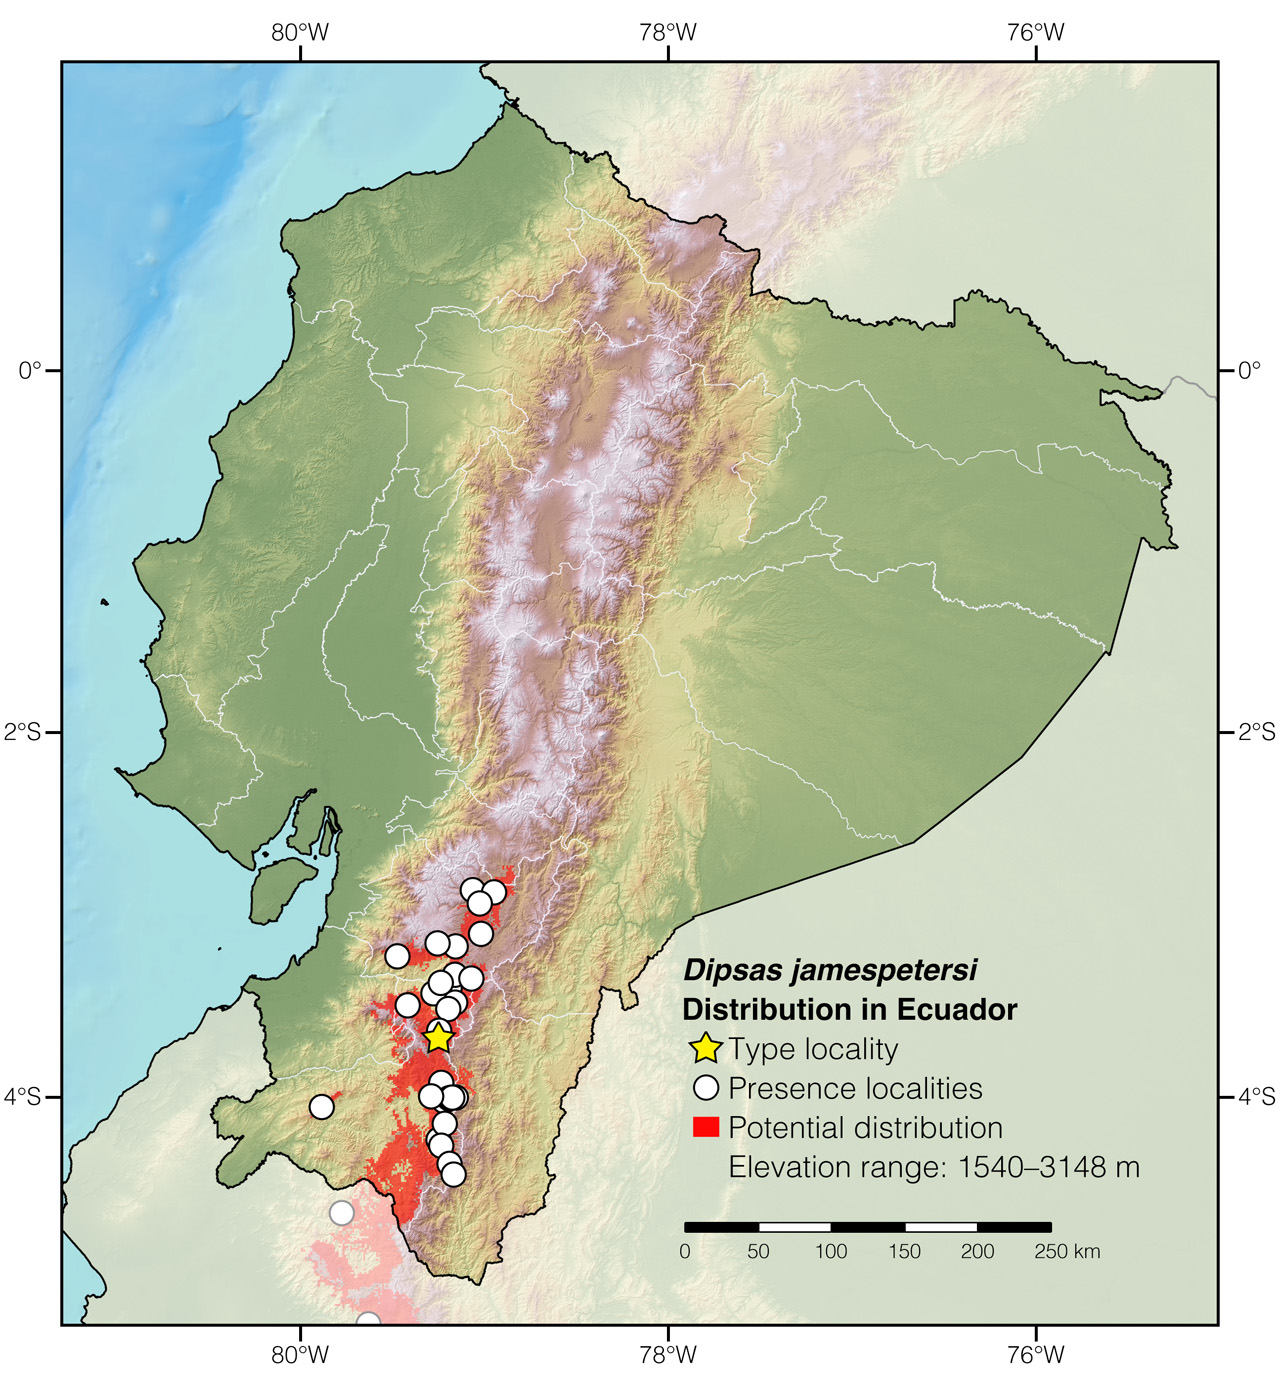 Distribution of Dipsas jamespetersi in Ecuador